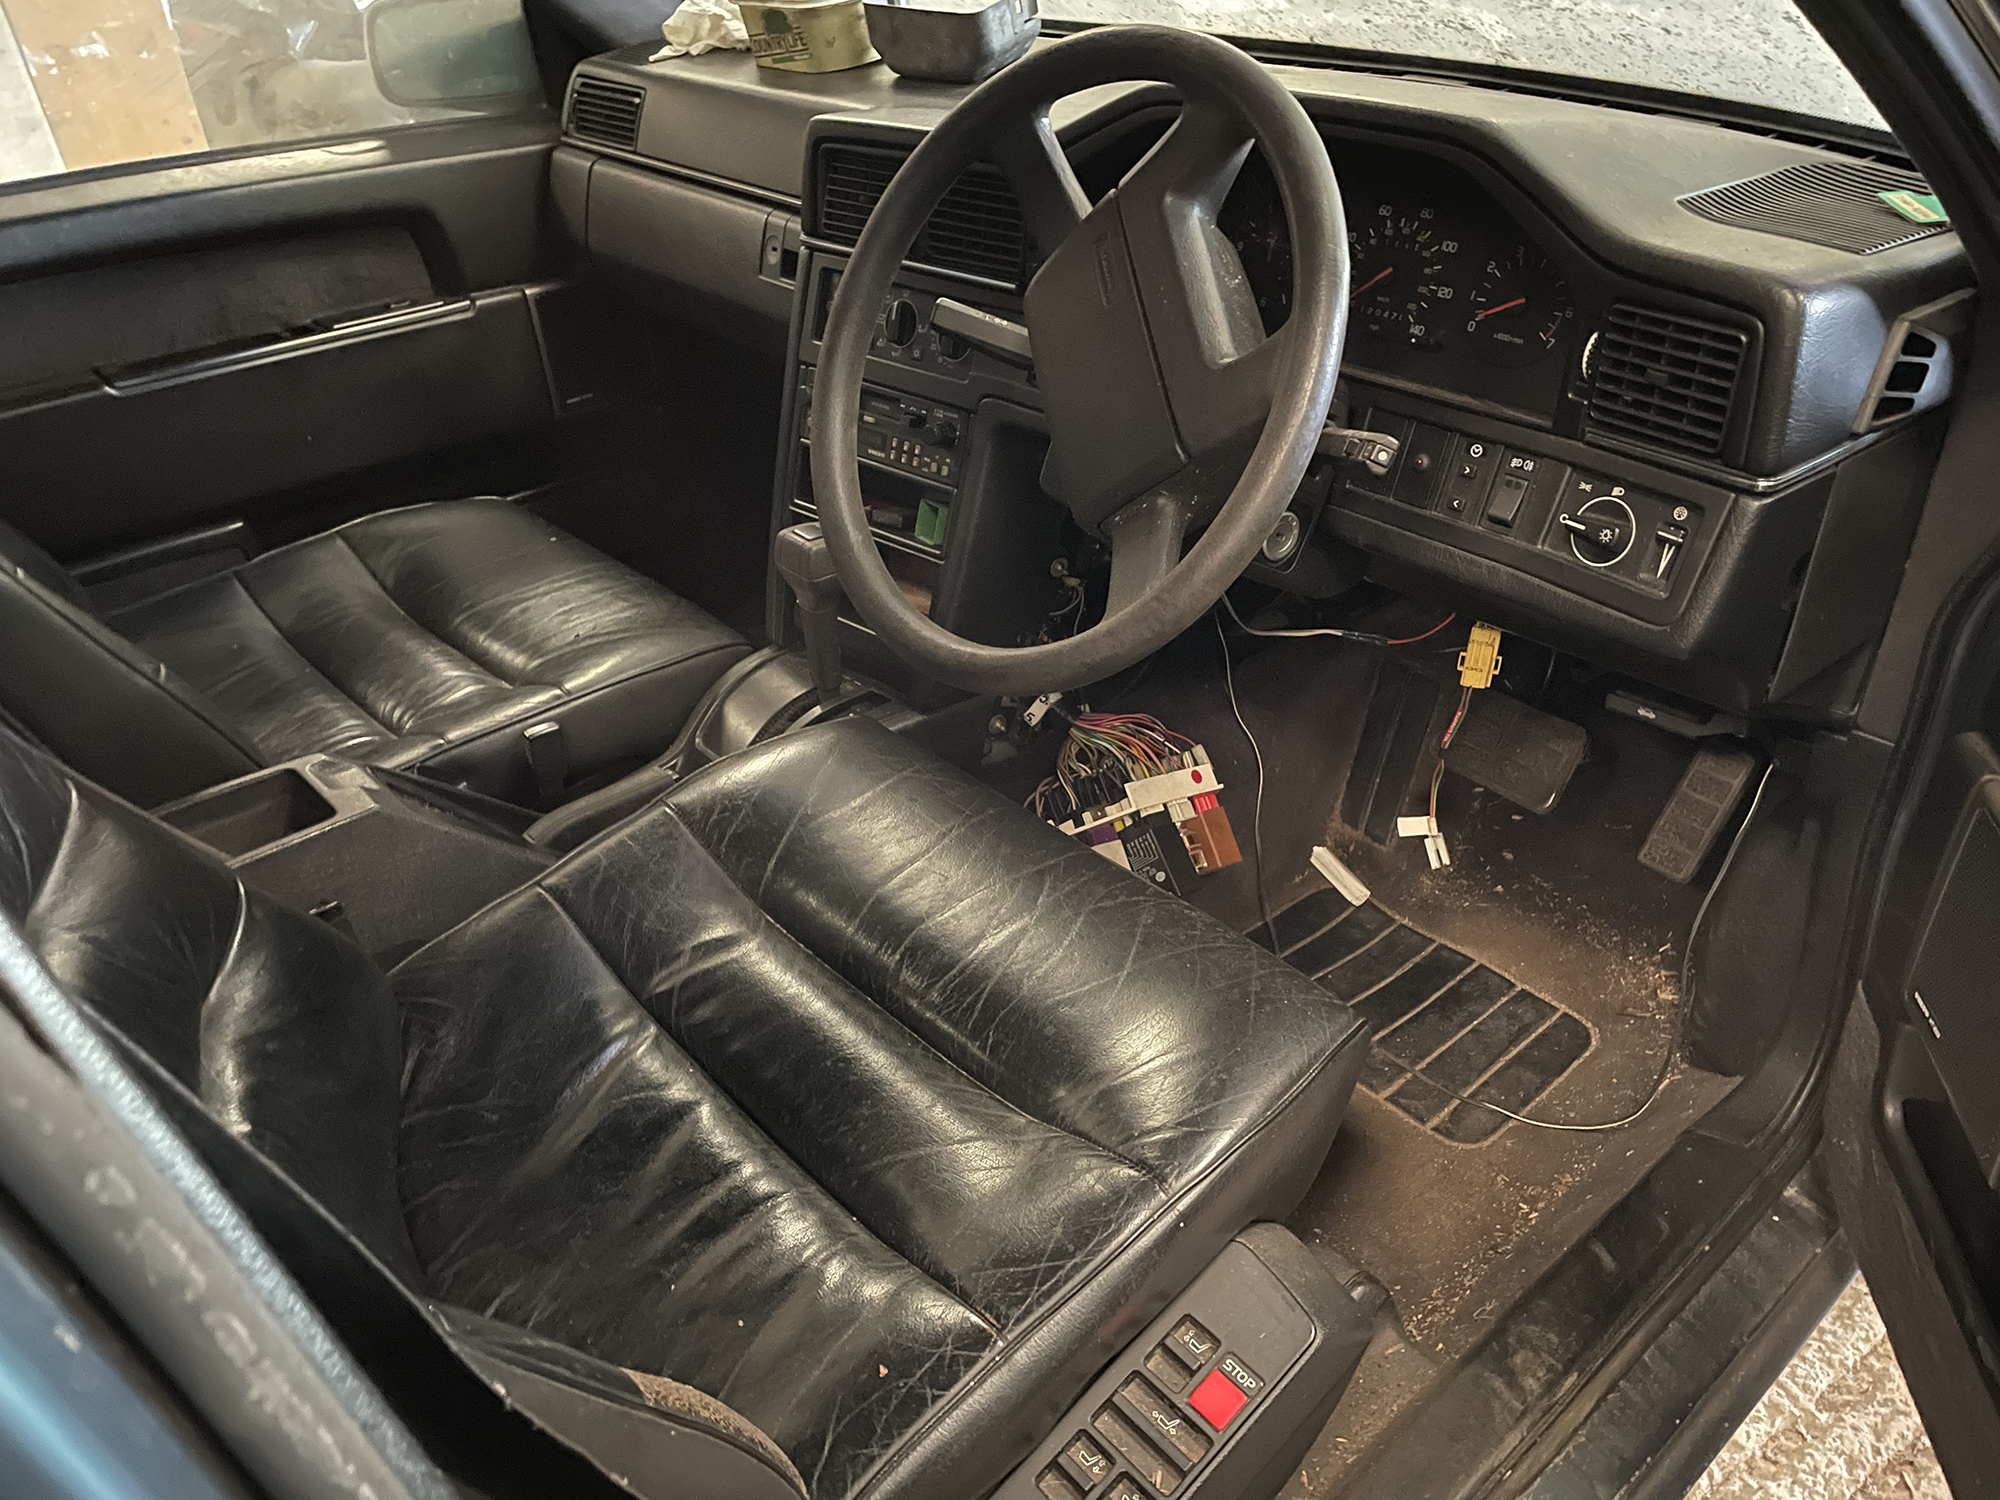 1988 Volvo 760 GLE Estate Reg. no. E696 FCN Chassis no. YV1765687J0020932 - Image 9 of 14